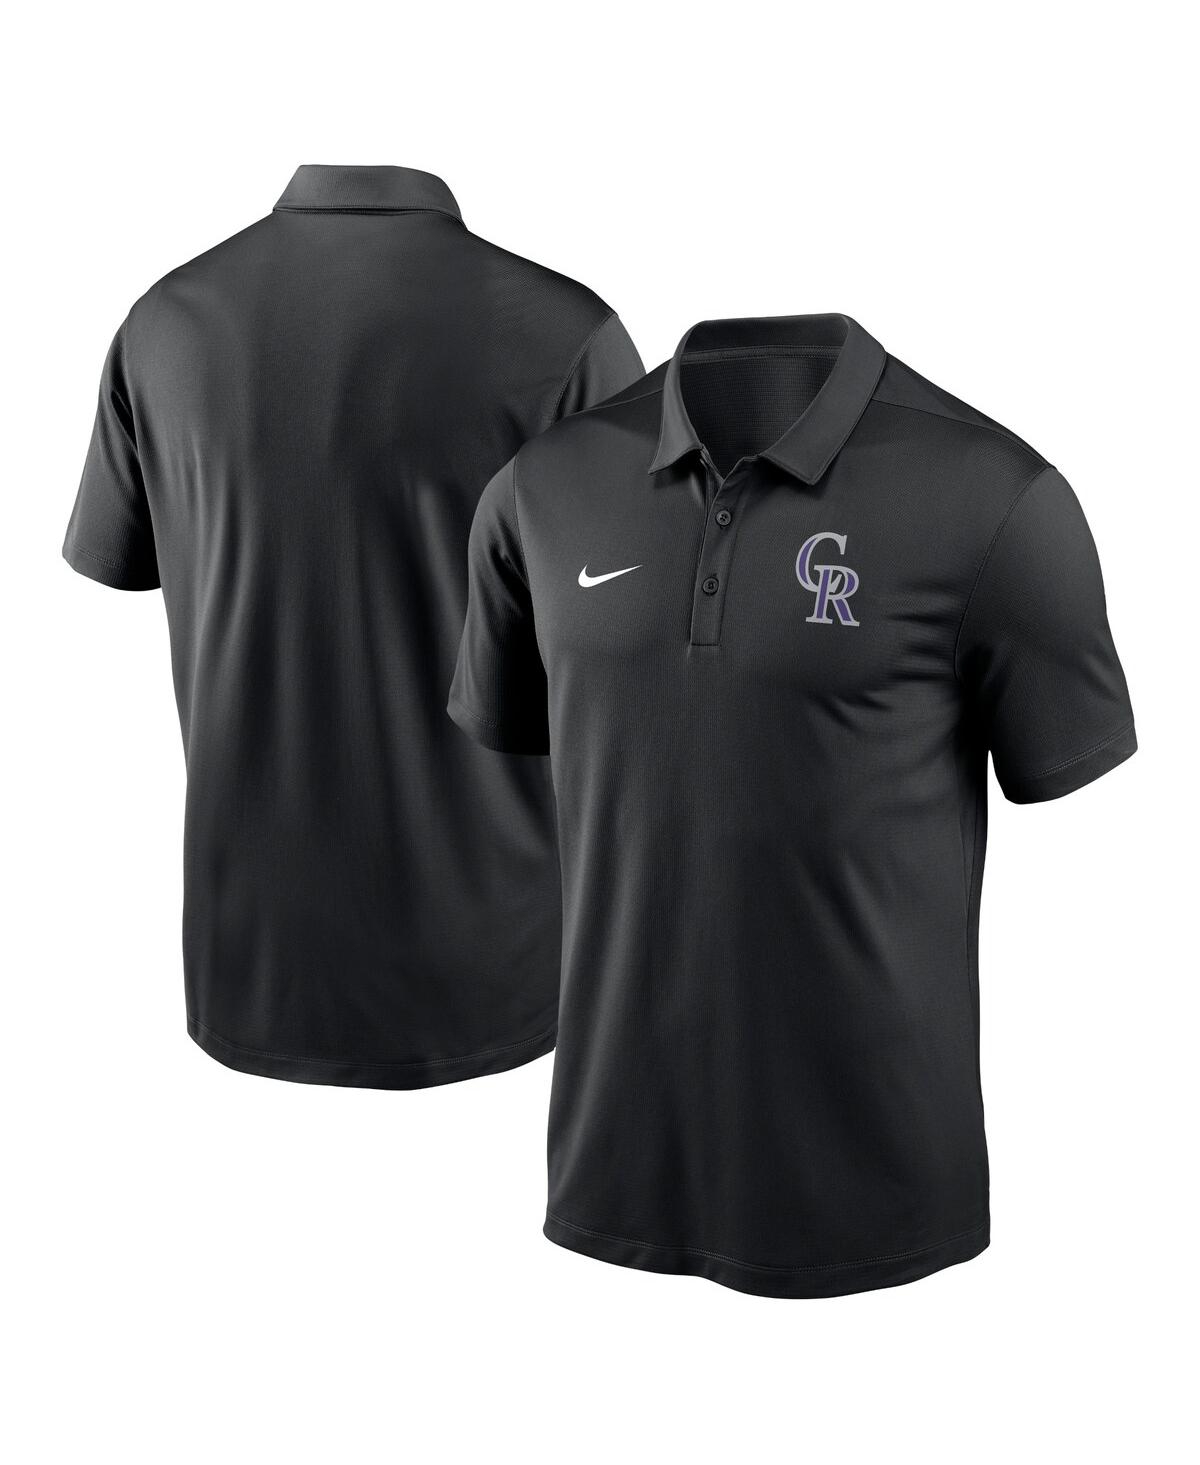 Men's Nike Black Colorado Rockies Agility Performance Polo Shirt - Black